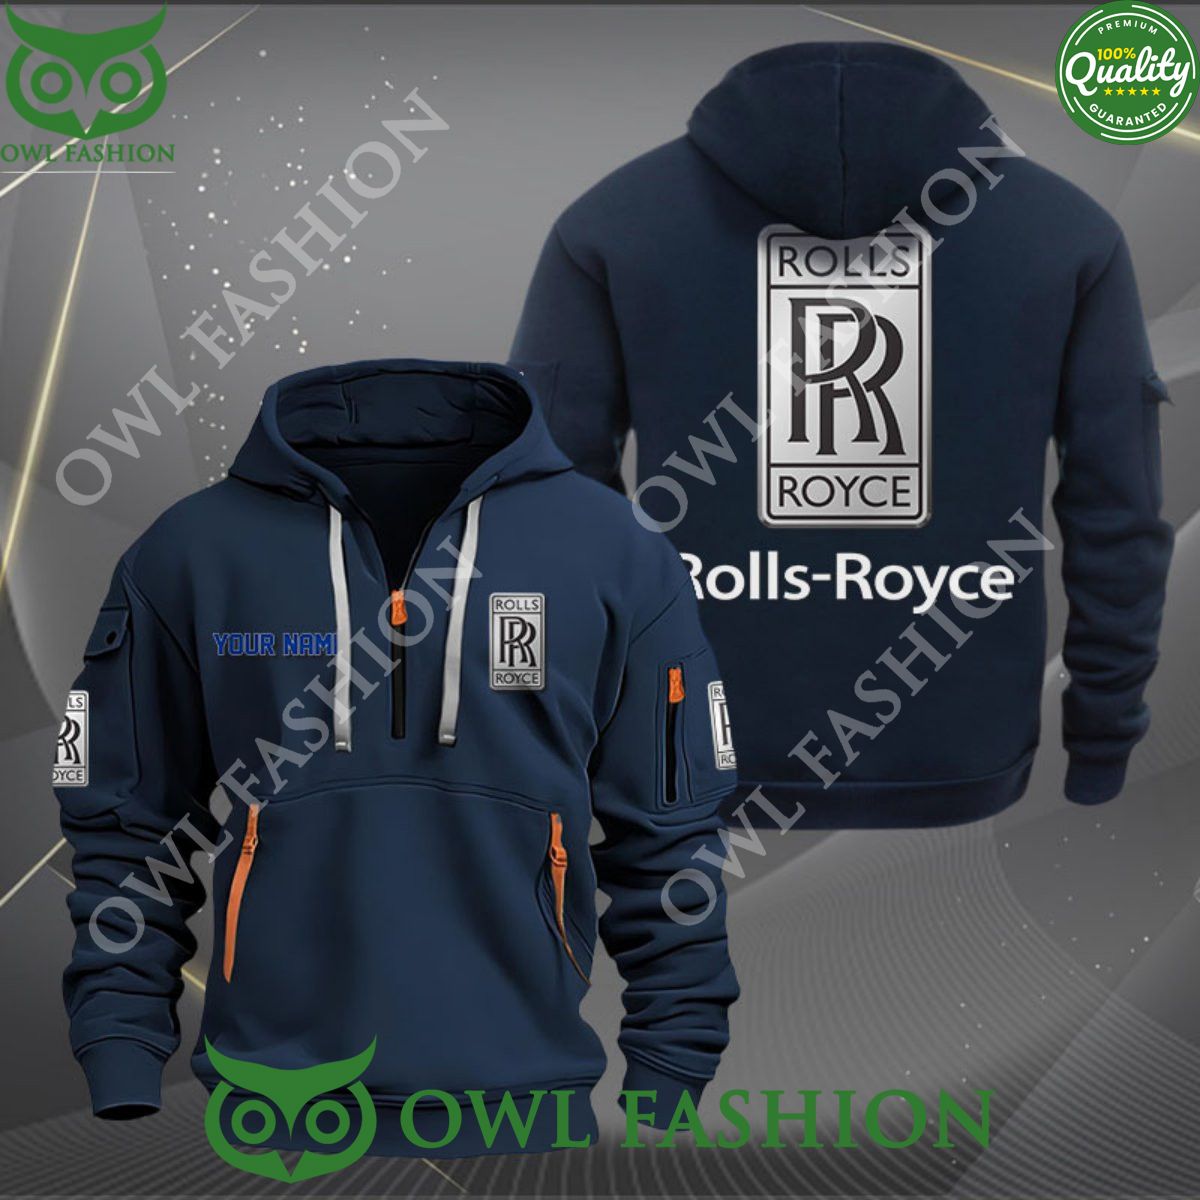 rolls royce brand logo personalized 2d half zipper hoodie 1 Nl66M.jpg